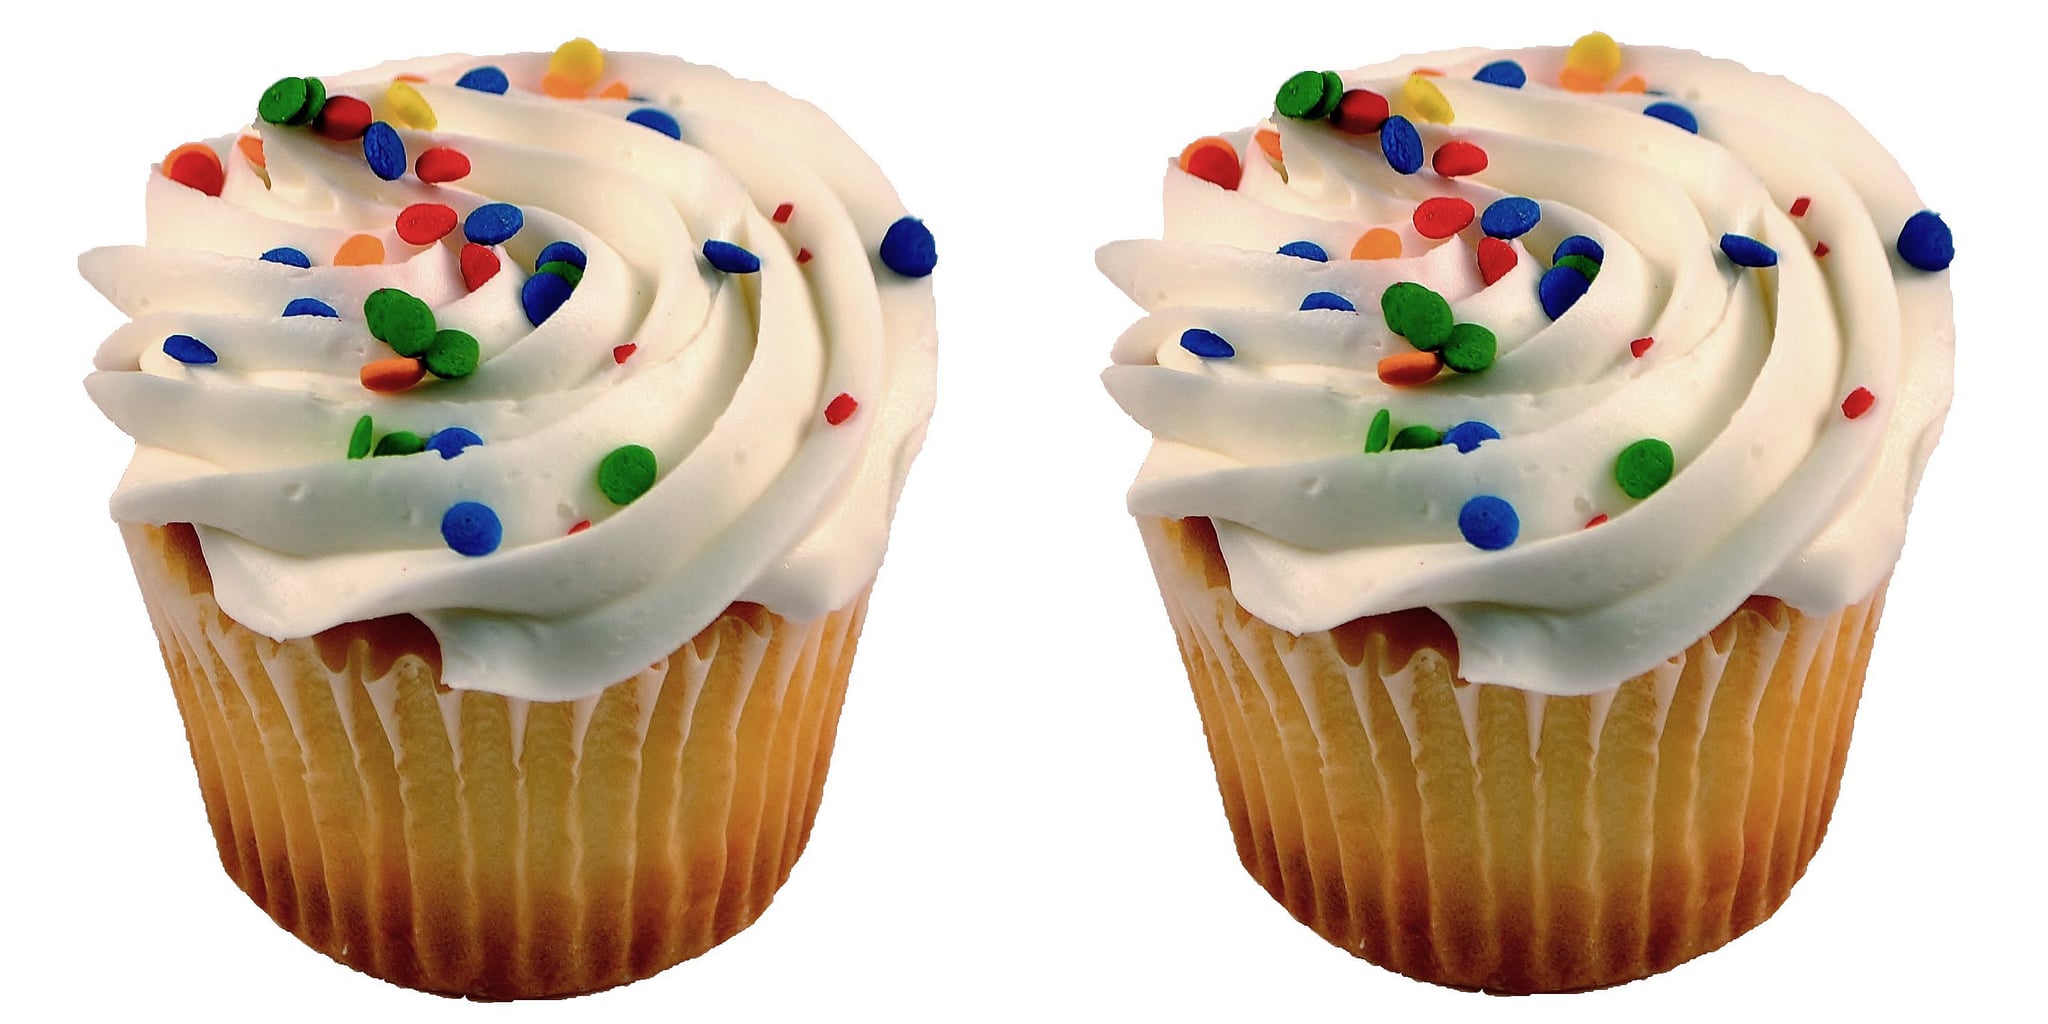 How to Get a Free Cupcake at Walmart | POPSUGAR Food